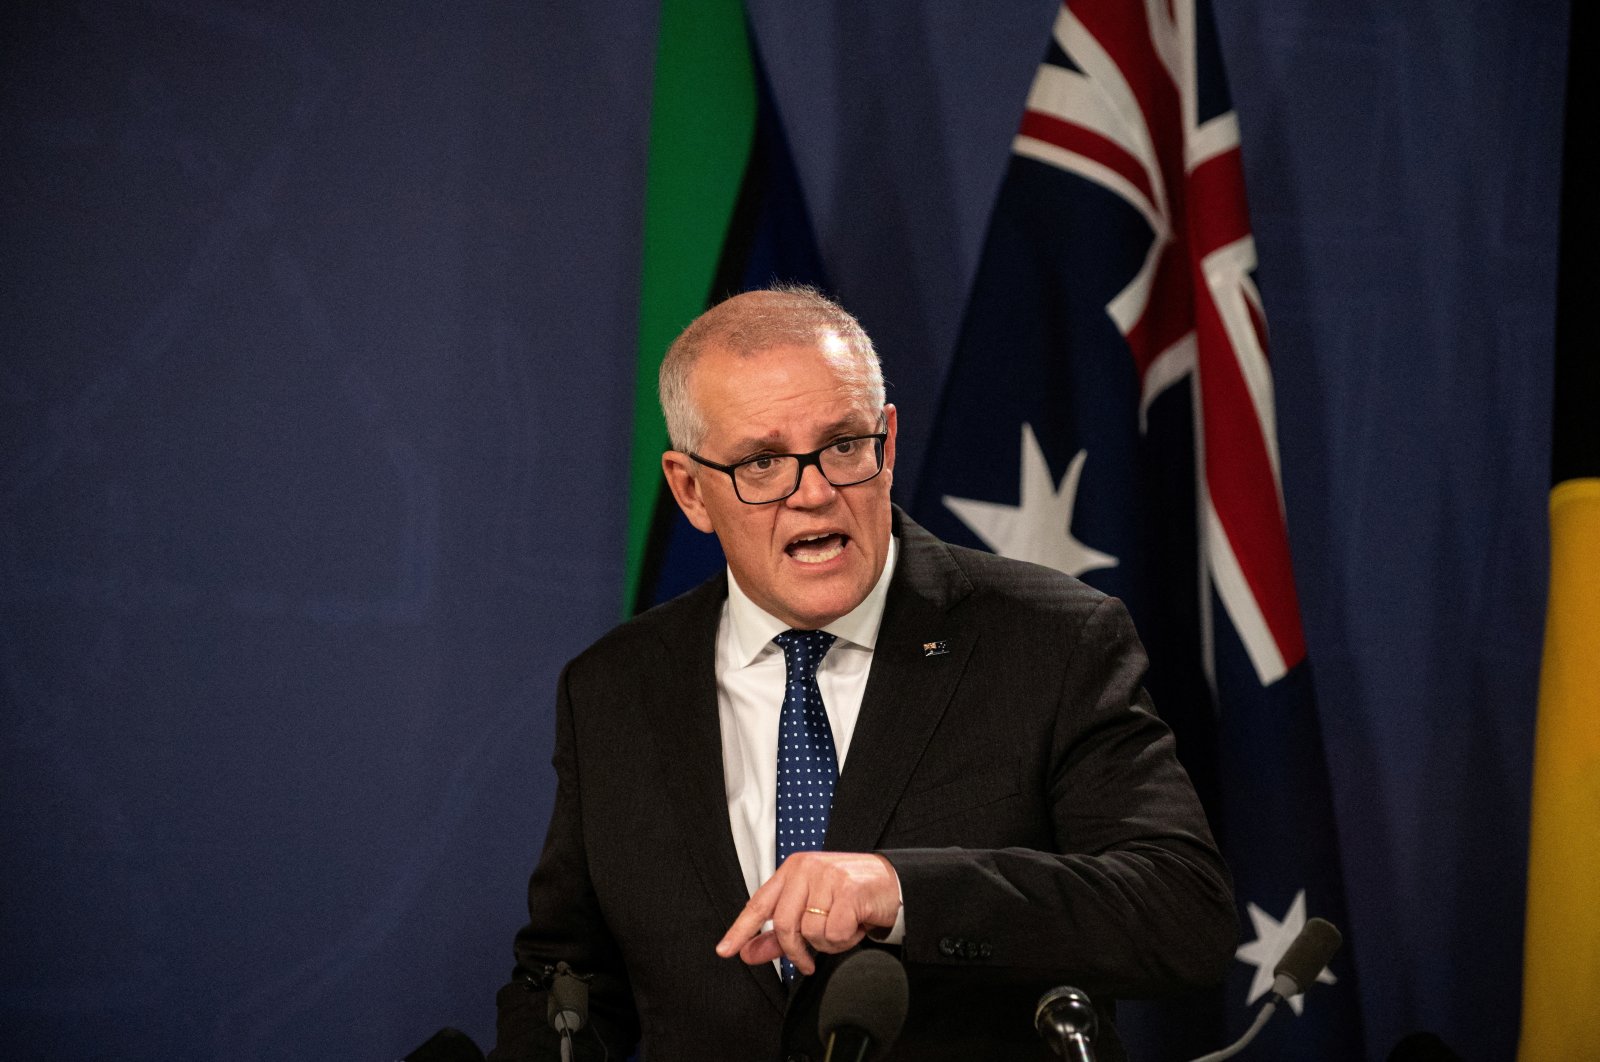 Former Australian Prime Minister Scott Morrison speaks to media during a news conference in Sydney, Australia, Aug. 17, 2022. (AAP Image/Flavio Brancaleone via Reuters)